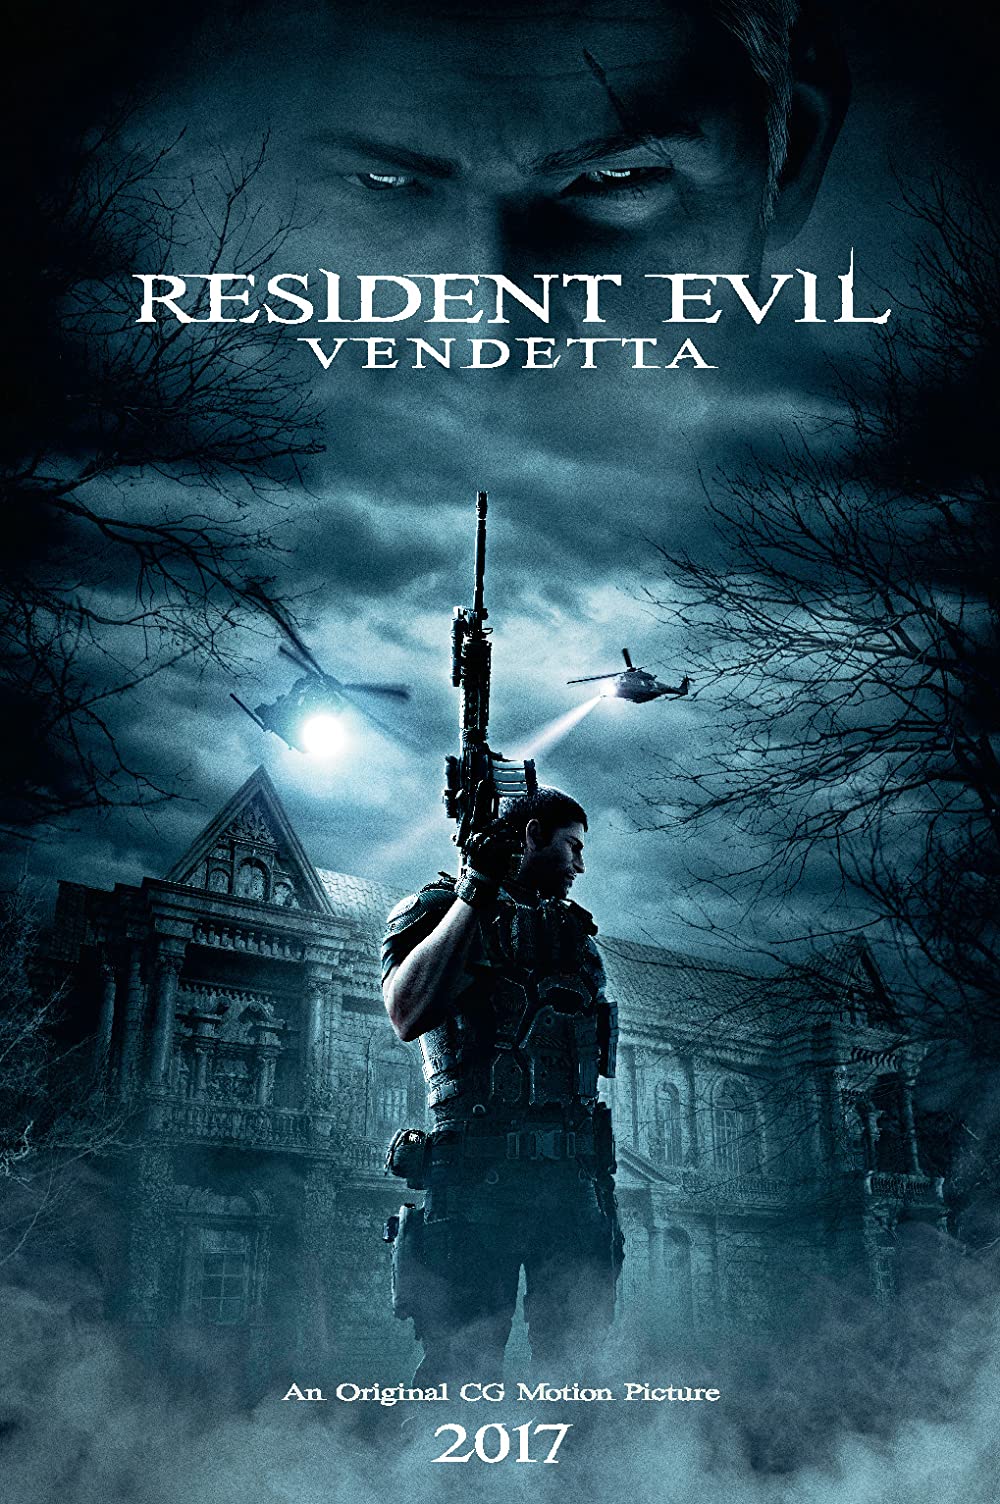 Filmbeschreibung zu Resident Evil: Vendetta